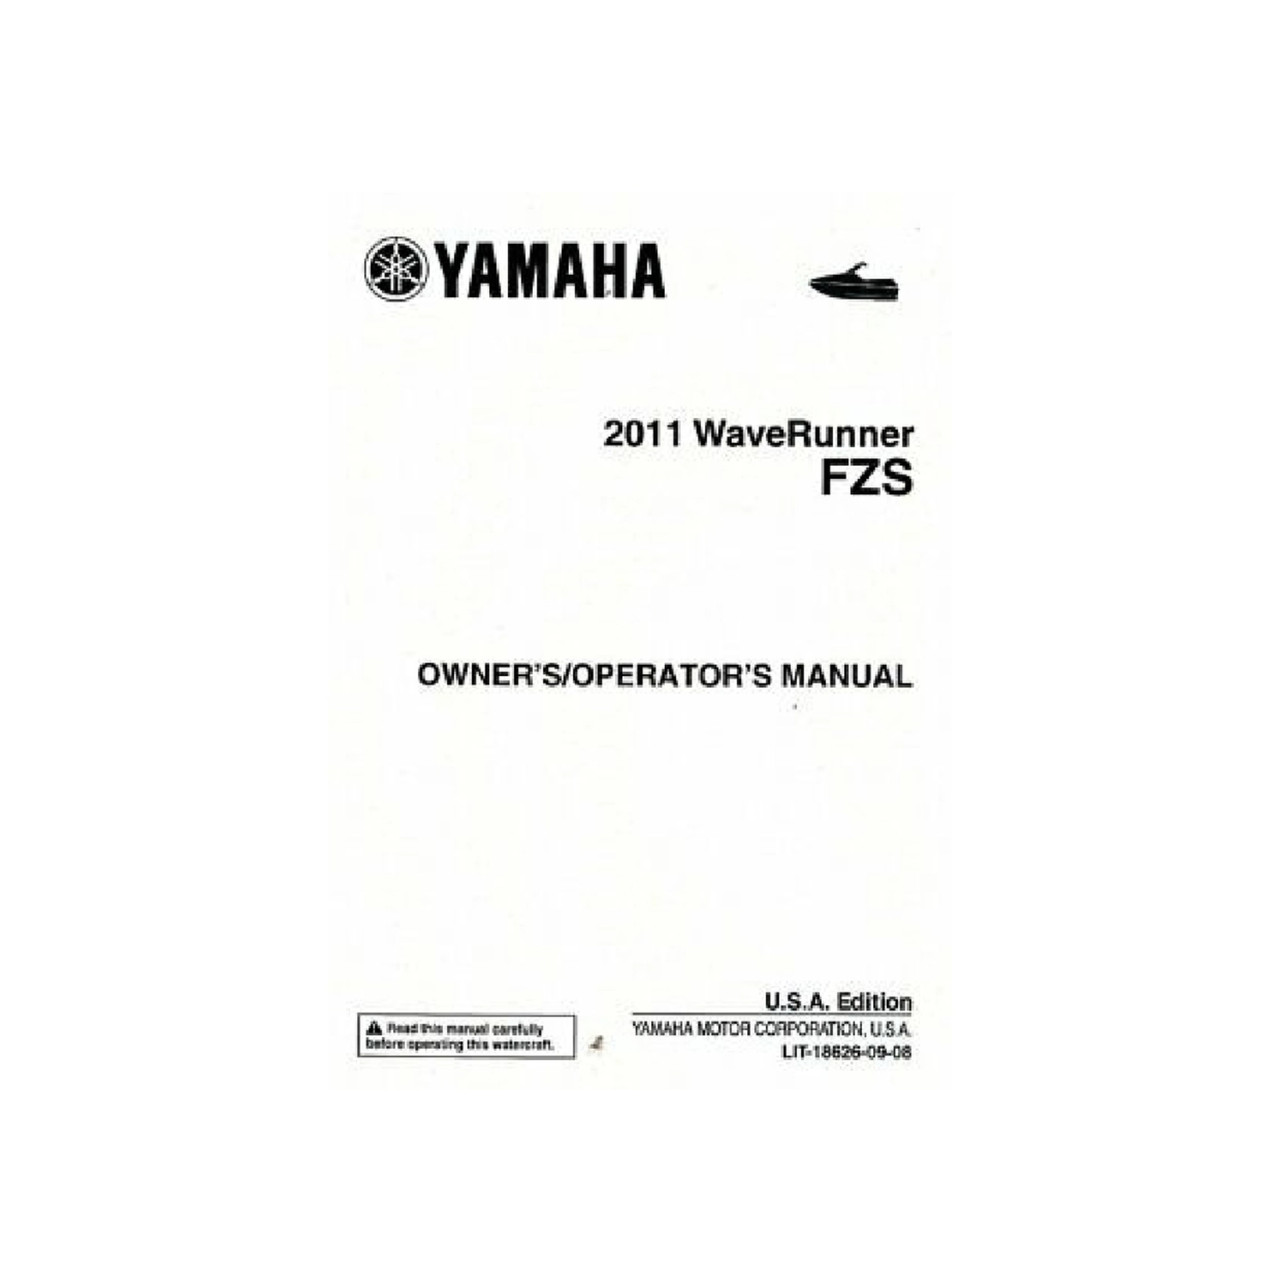 Yamaha New OEM 2011 WaveRunner FZS Owners Manual, LIT-18626-09-08